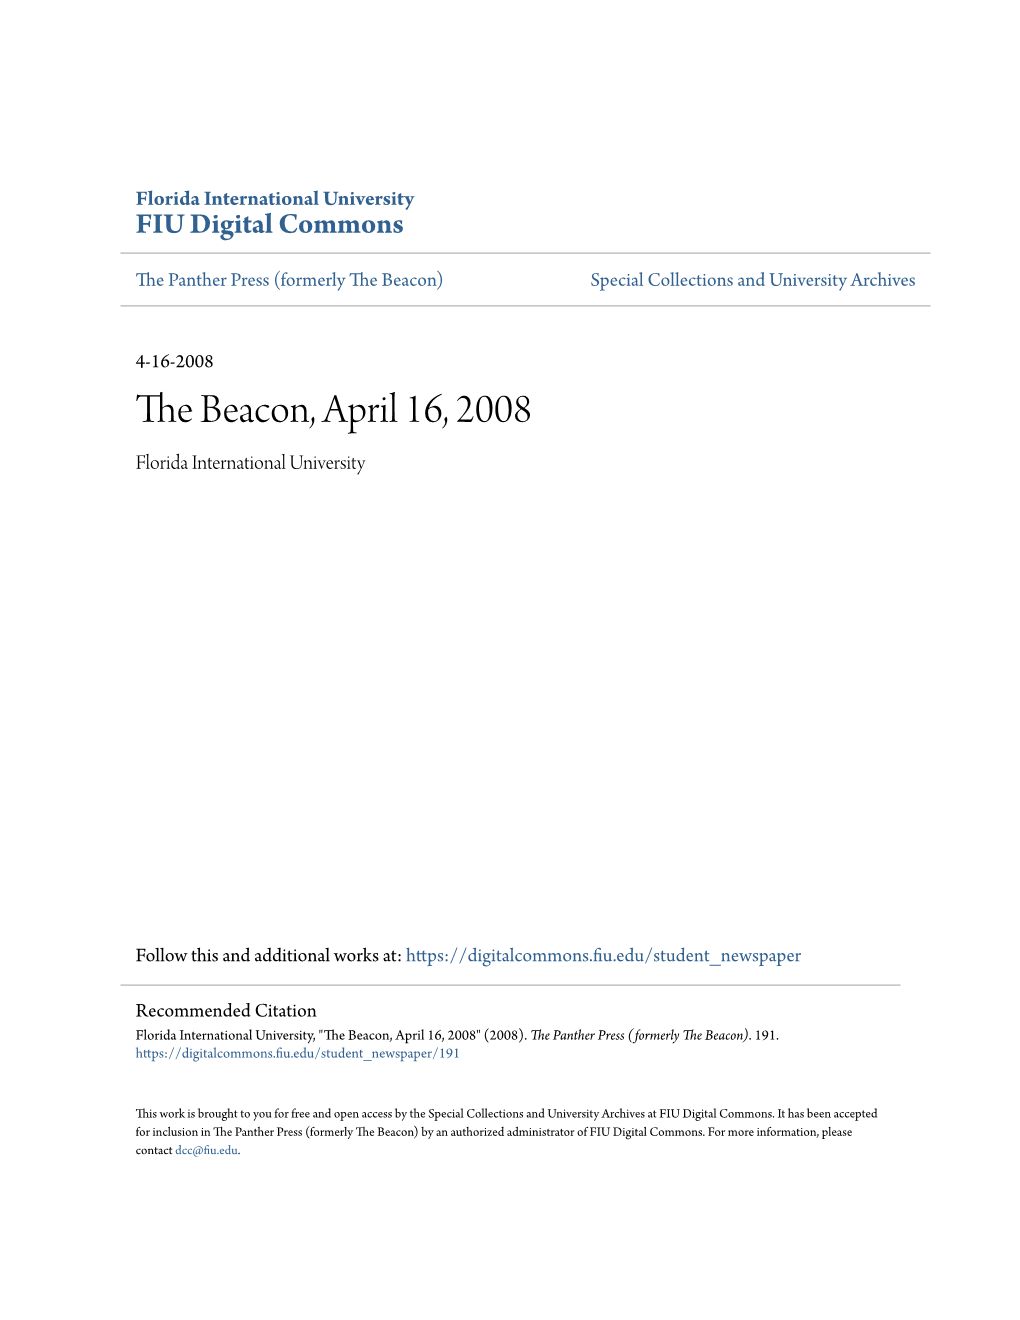 The Beacon, April 16, 2008 Florida International University